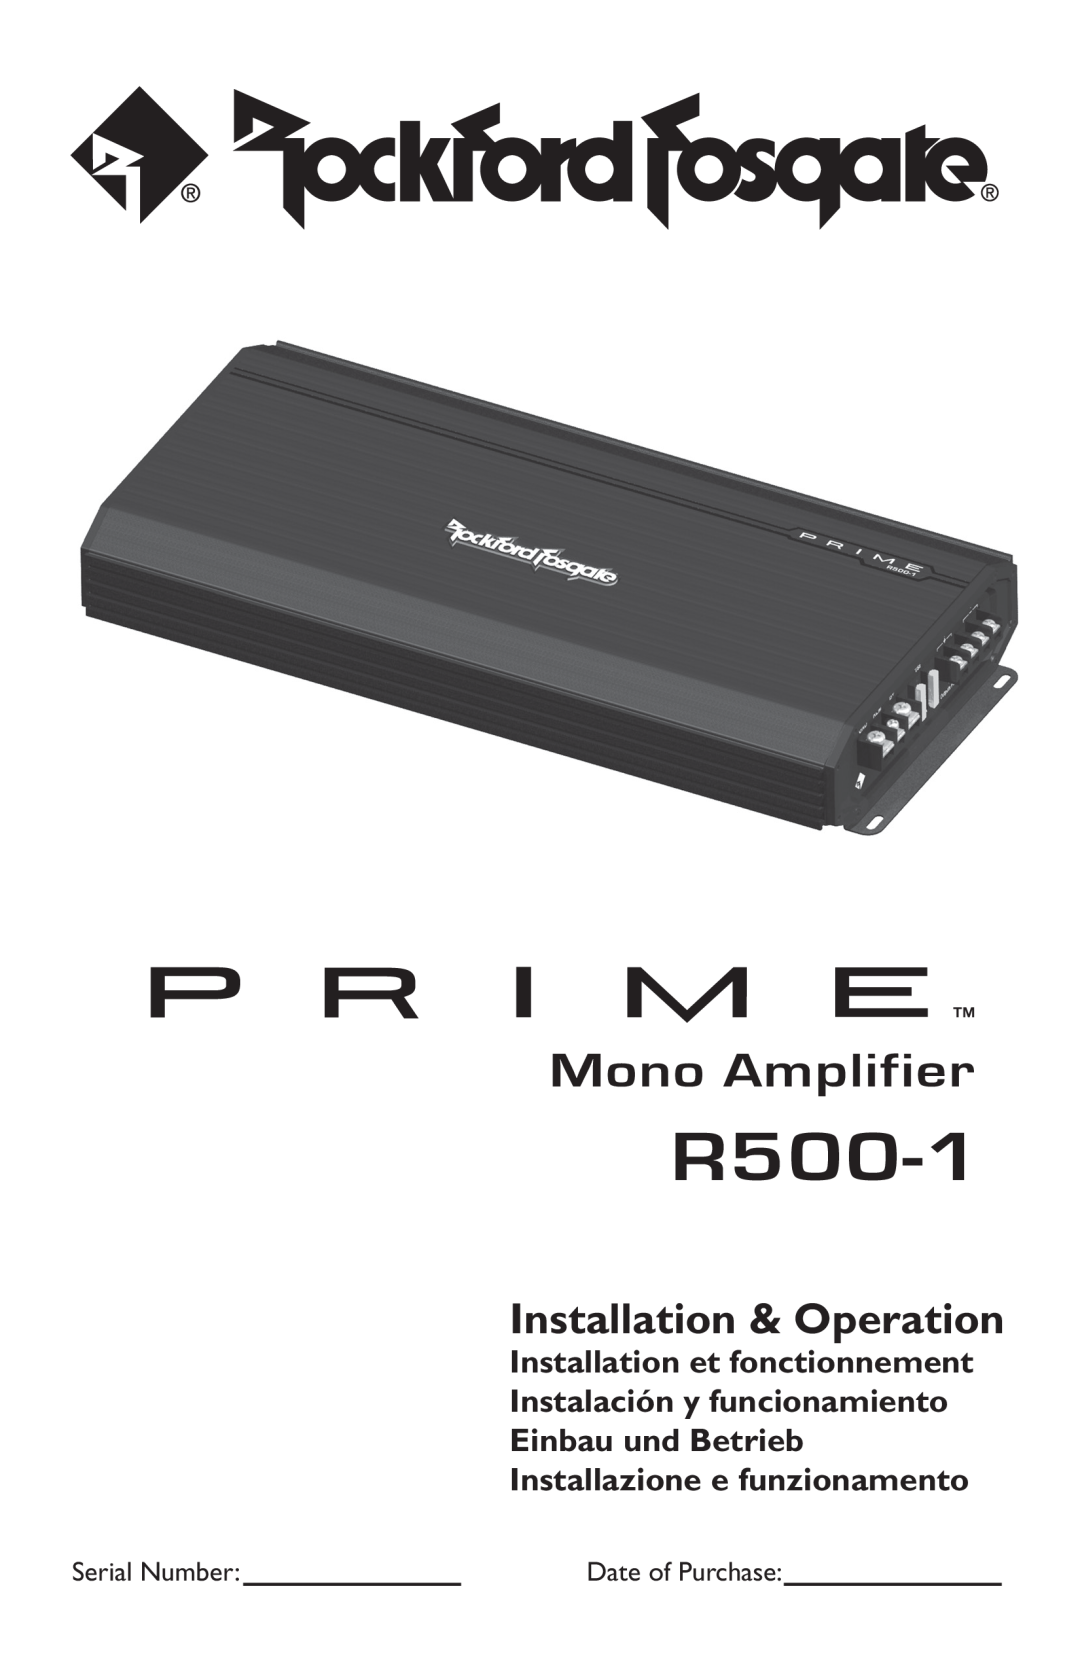 Rockford Fosgate R500-1 manual Mono Amplifier, Installation & Operation 